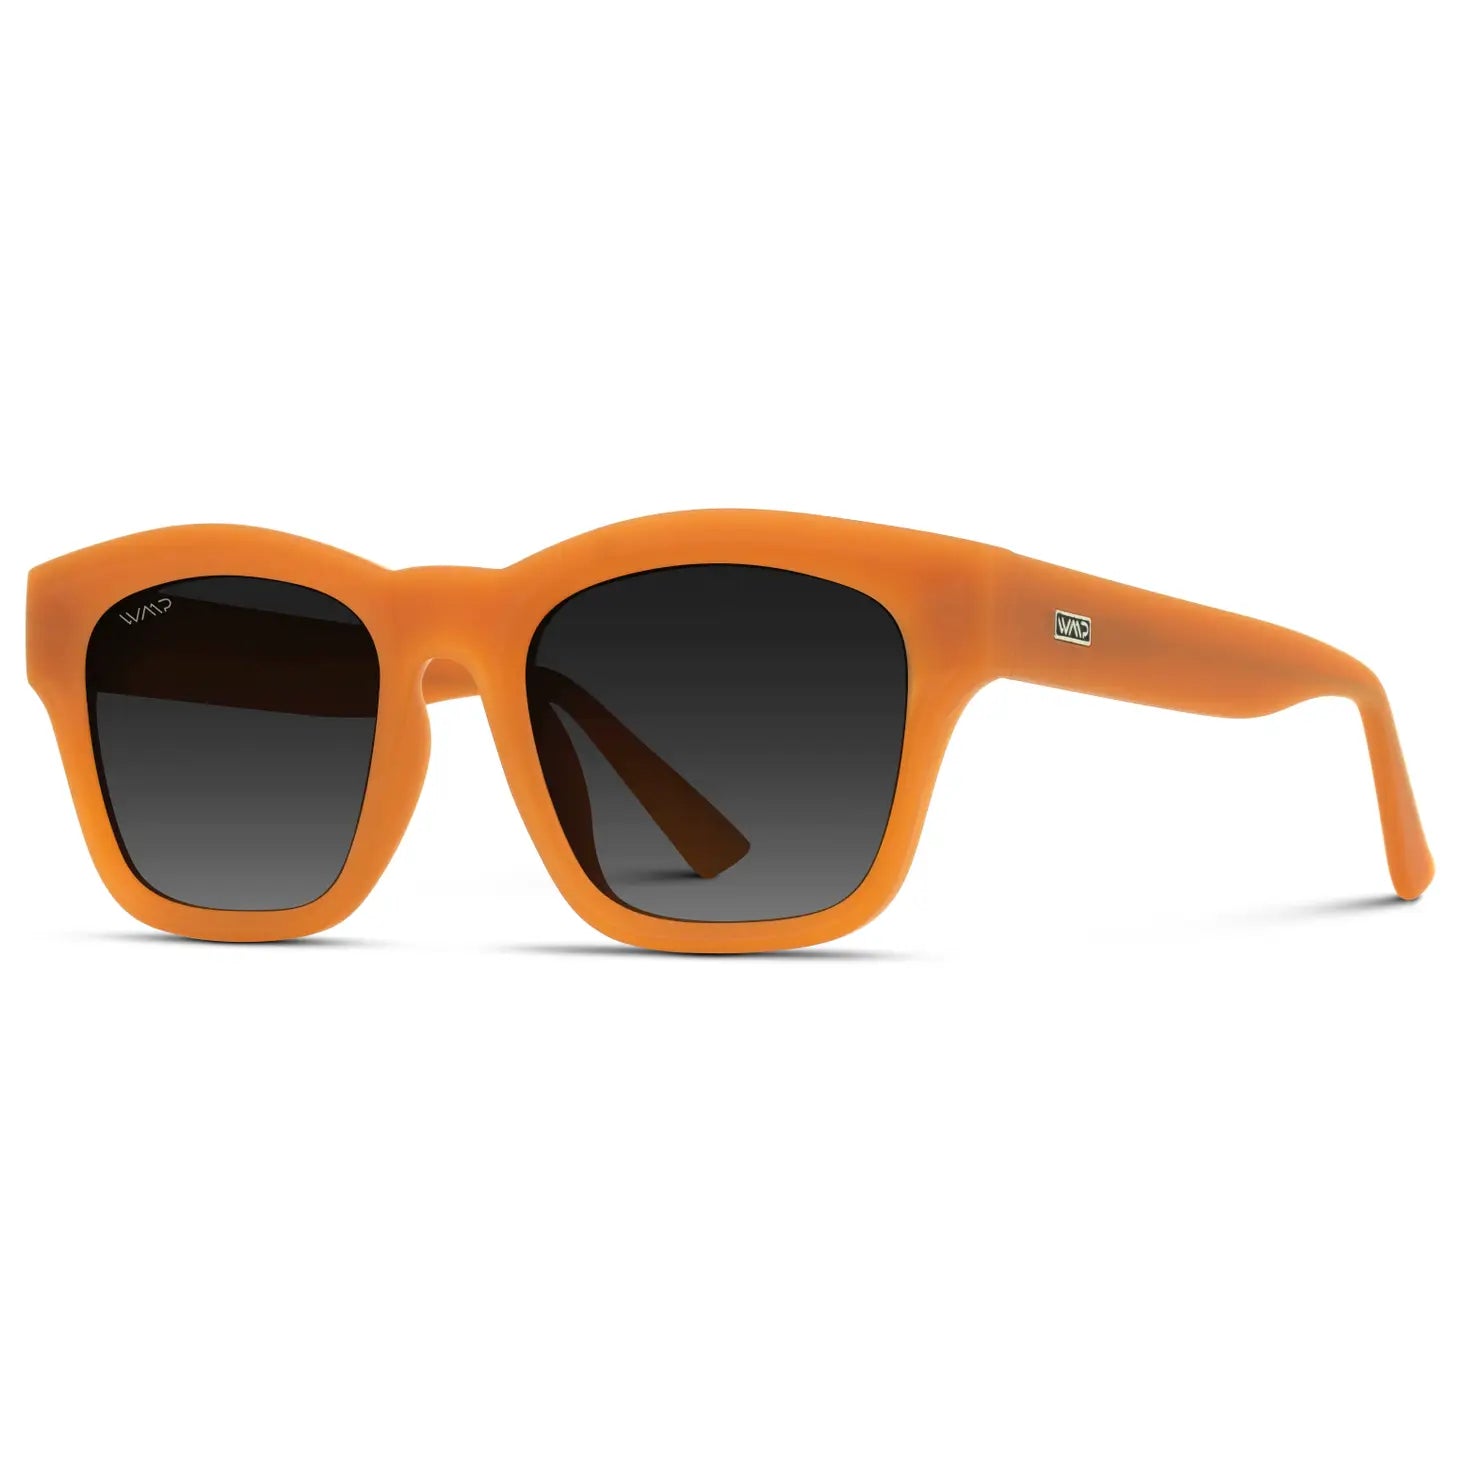 Sedona Sunglasses in Canyon Sunset